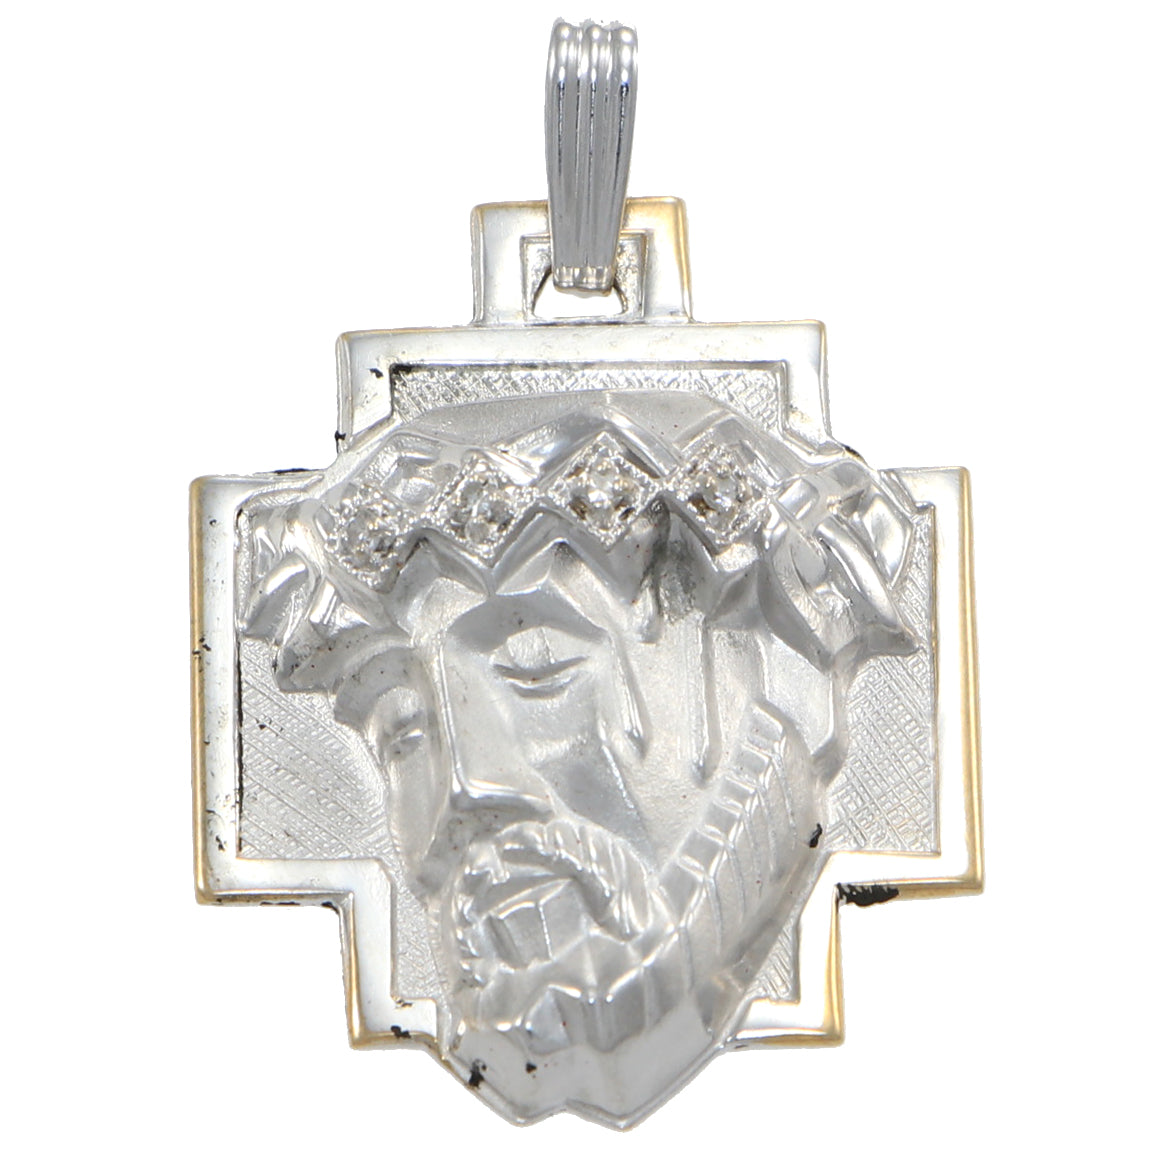 Mens Russian Greek Orthodox Crucifix Cross Pendant Necklace Stainless Steel  Men | eBay